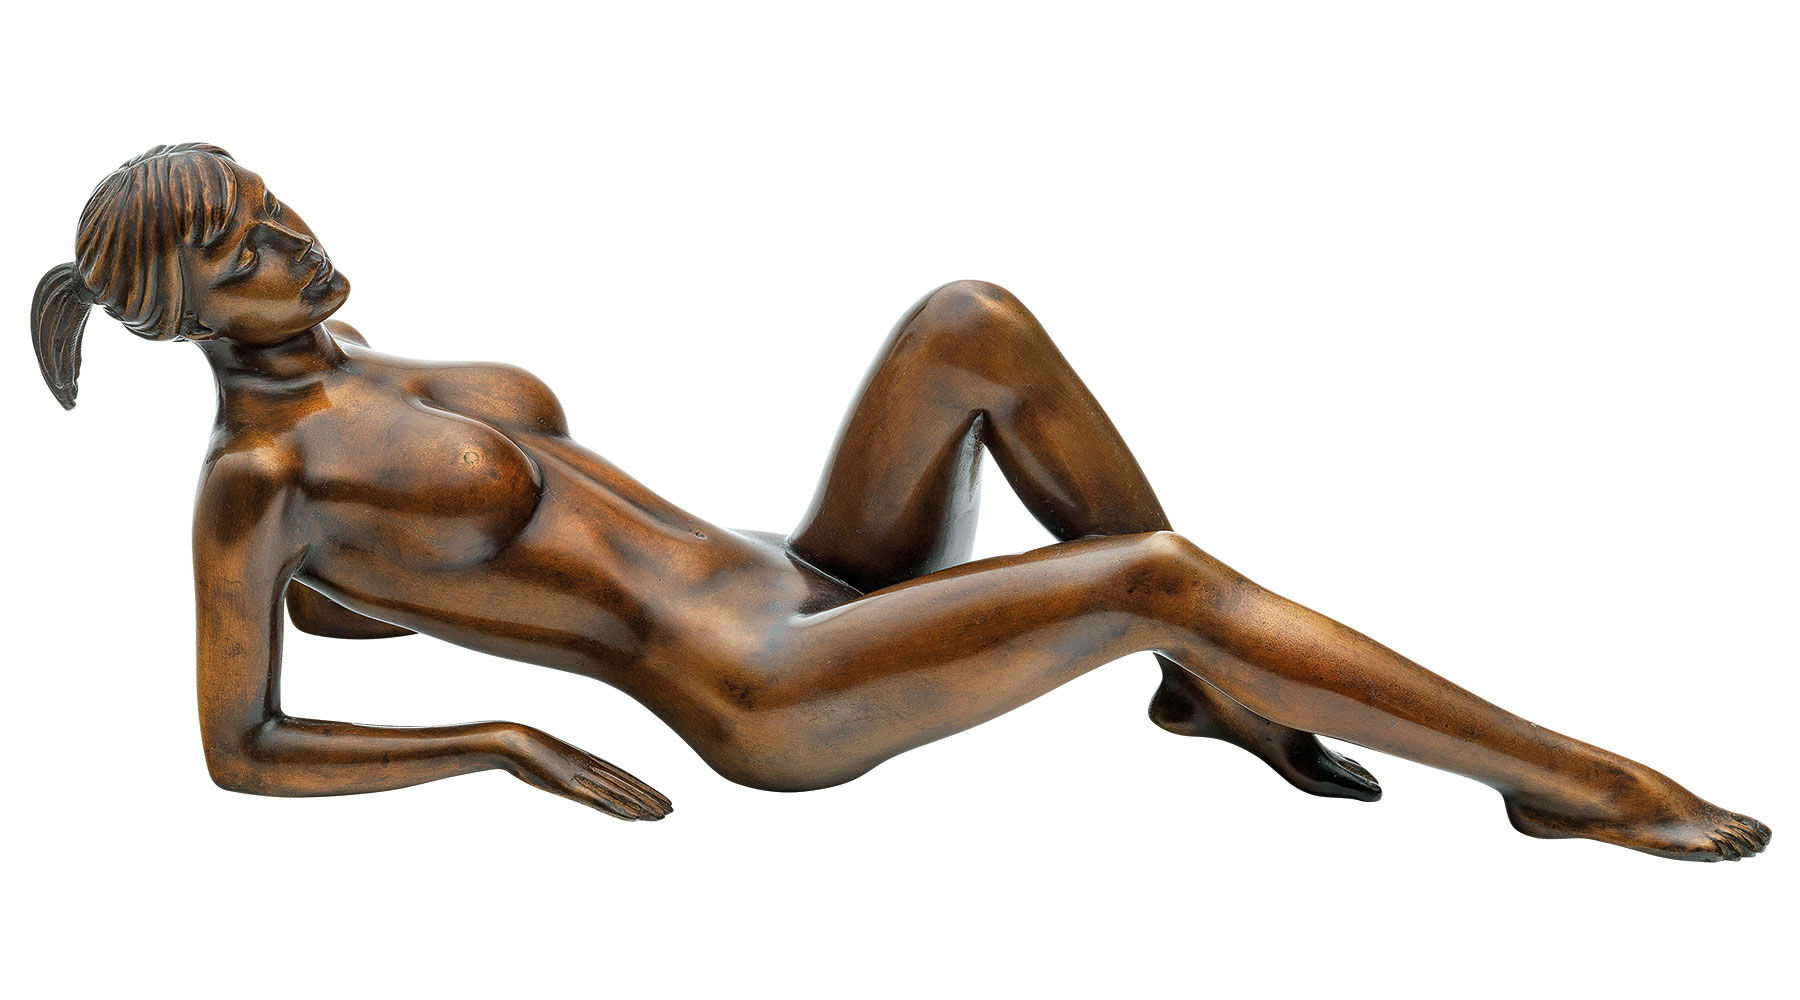 Skulptur "Den liggende kvinde", brun bronzeversion von Richard Senoner